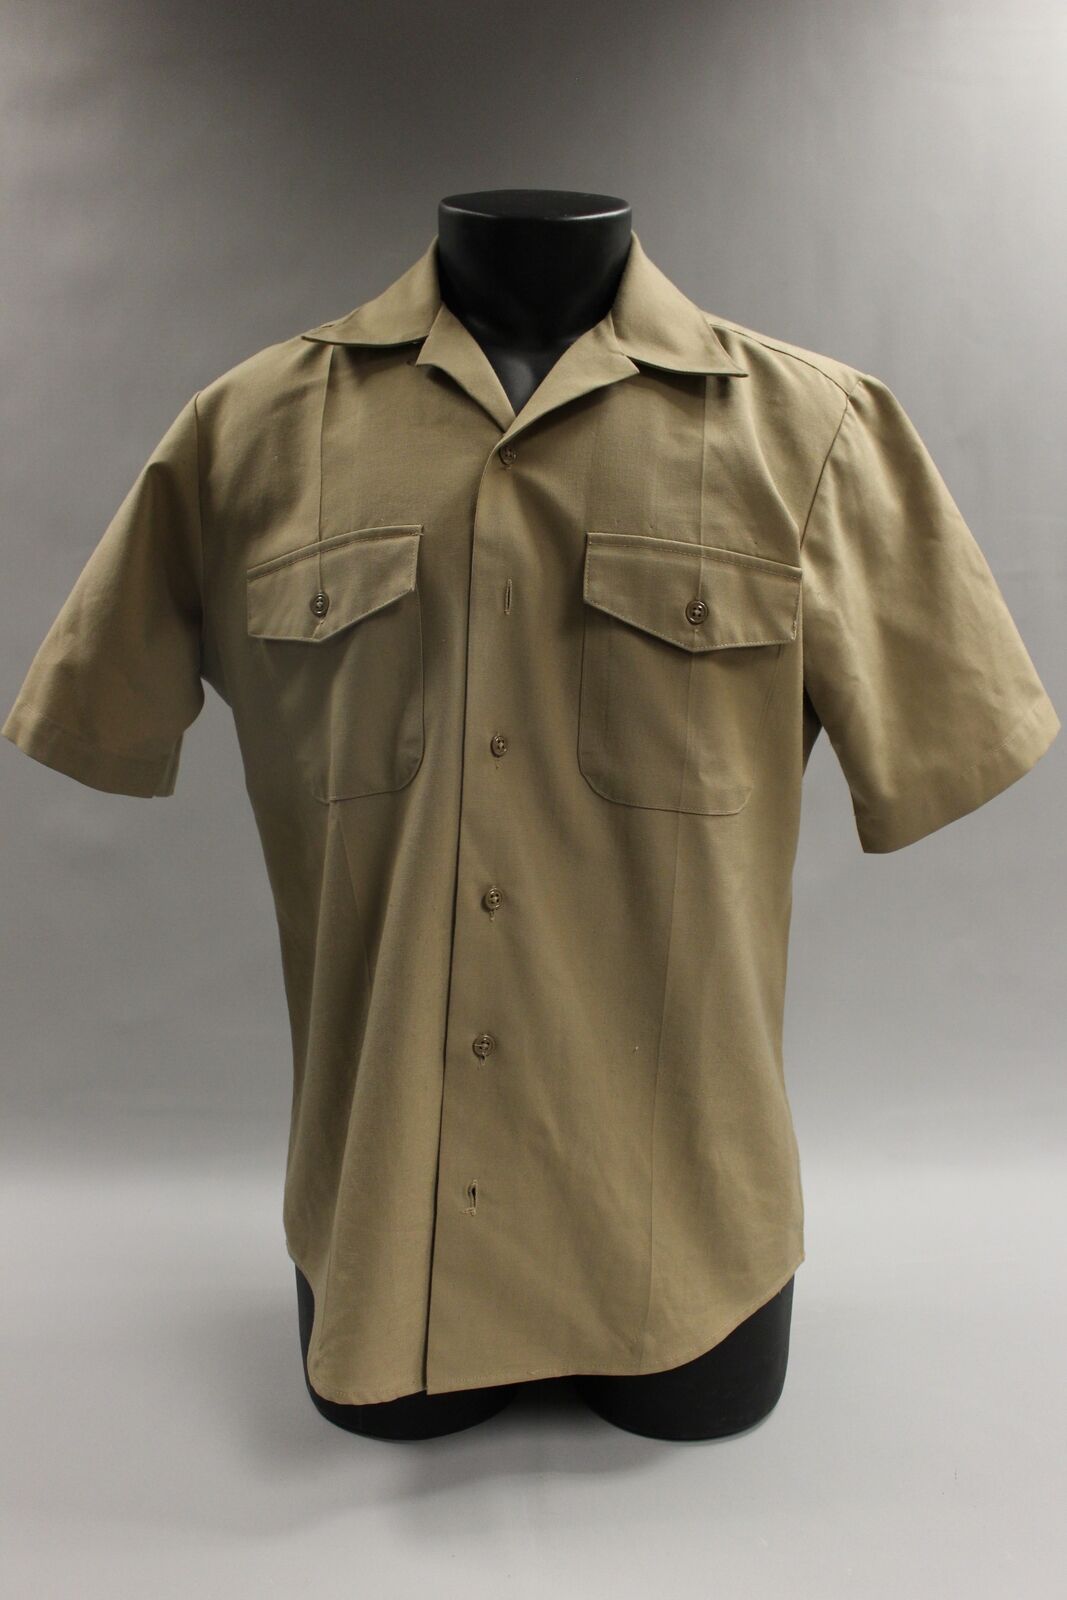 US Military Men\'s Tan Short Sleeve Shirt - Size: XLarge Classic - Khaki - Used